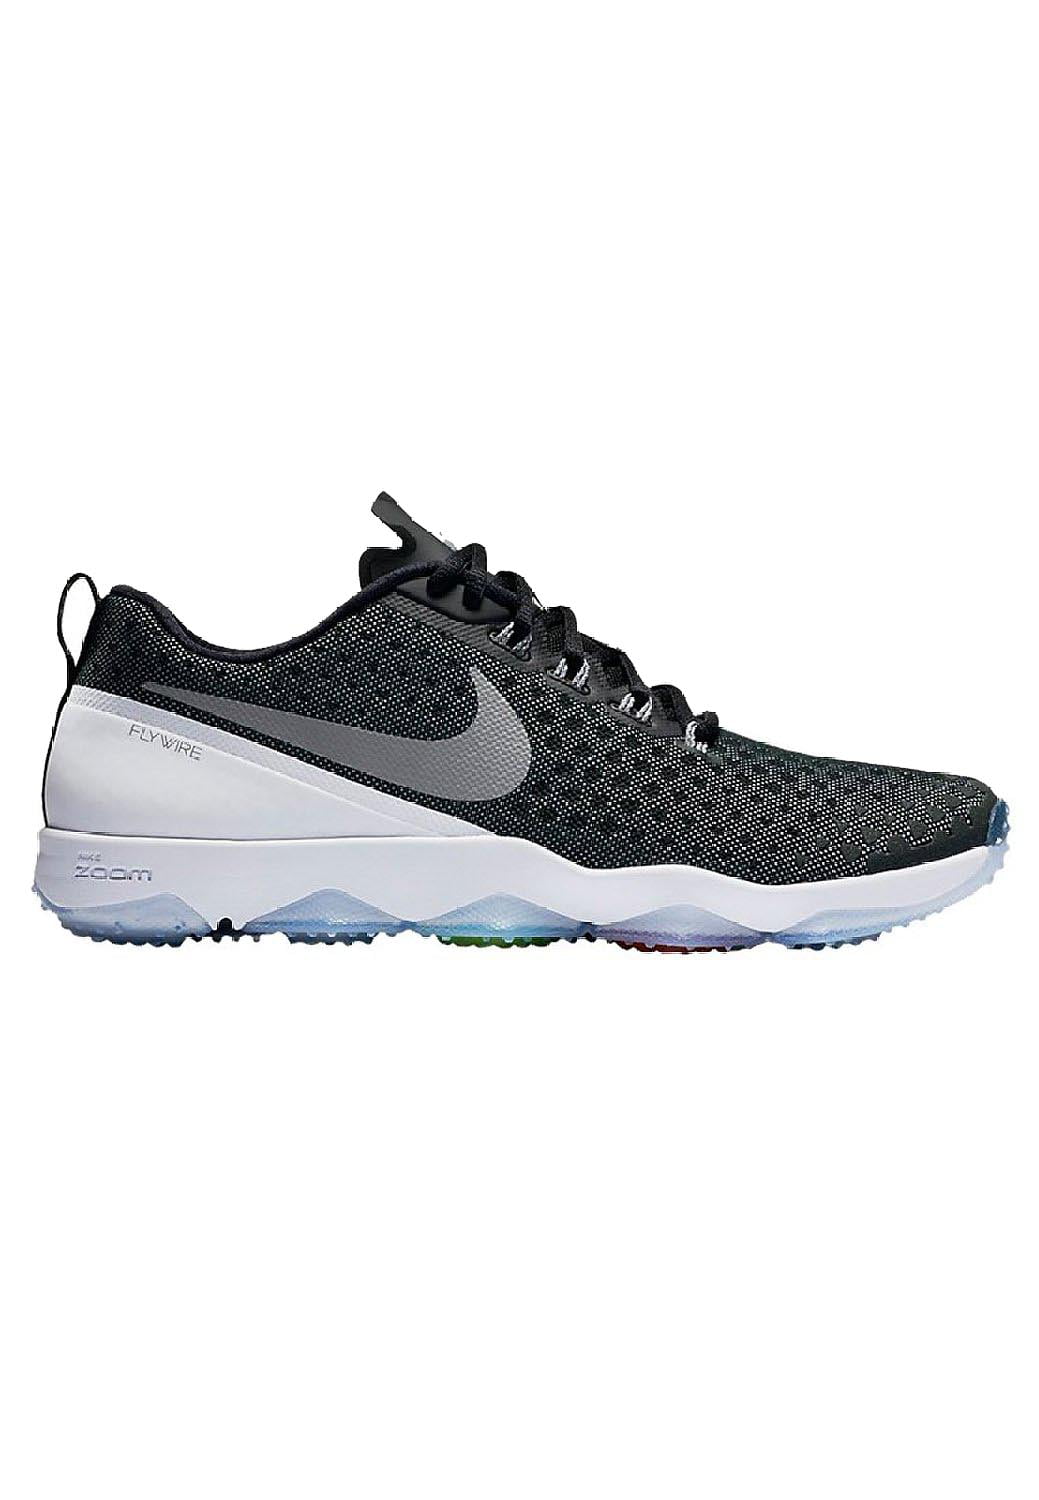 Nike Men's Hypercross TR2 Training Shoes-Black/Metallic Silver/Cool Grey - Walmart.com